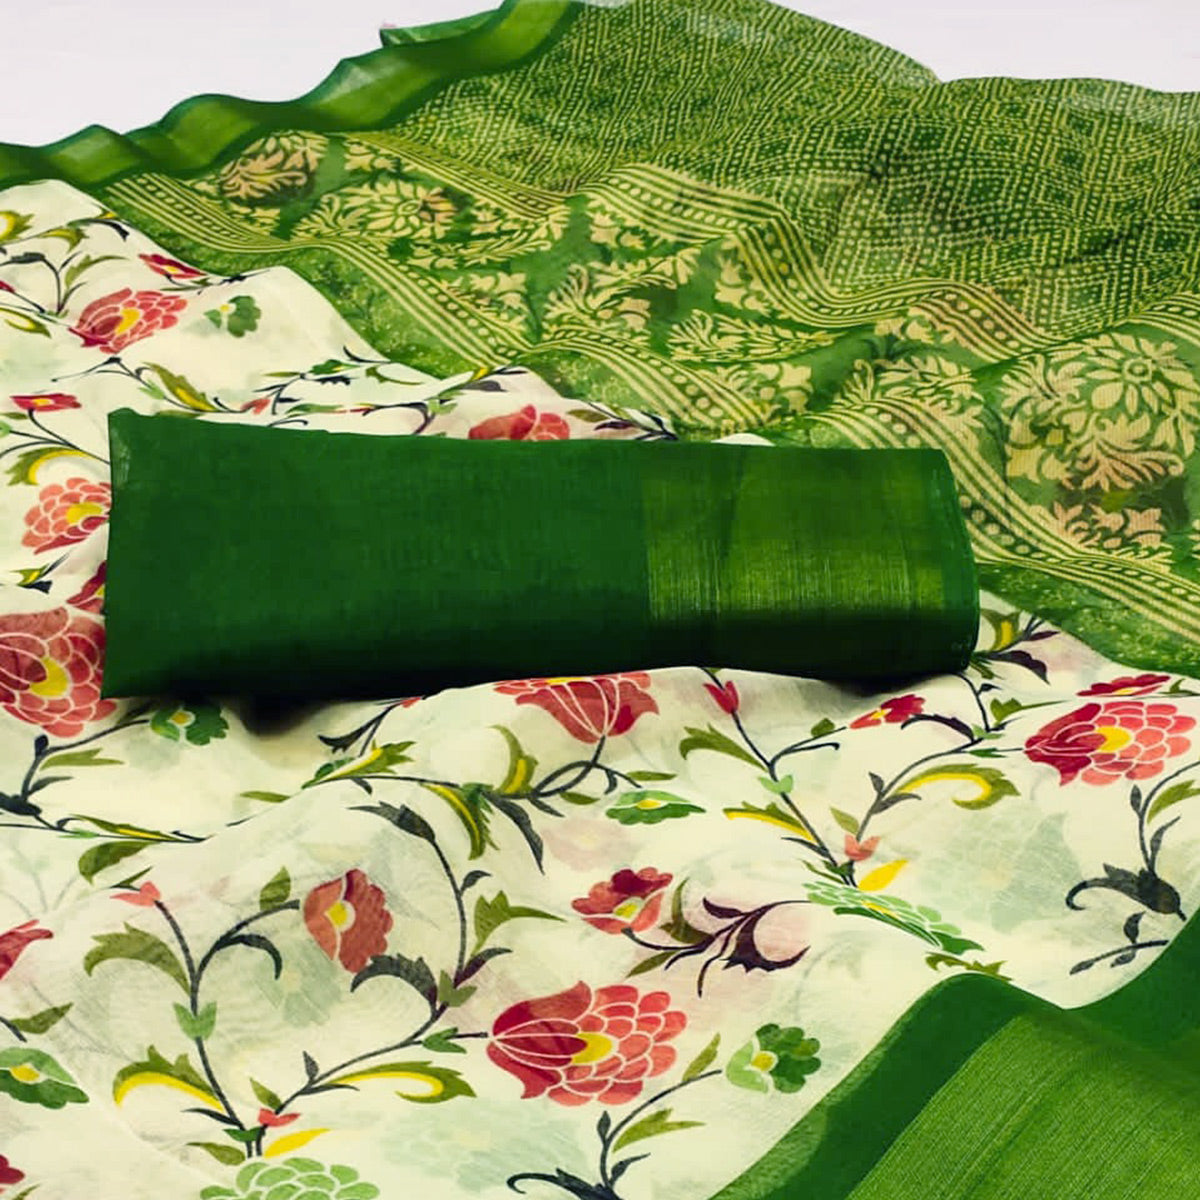 White & Green Floral Printed Cotton Blend Saree